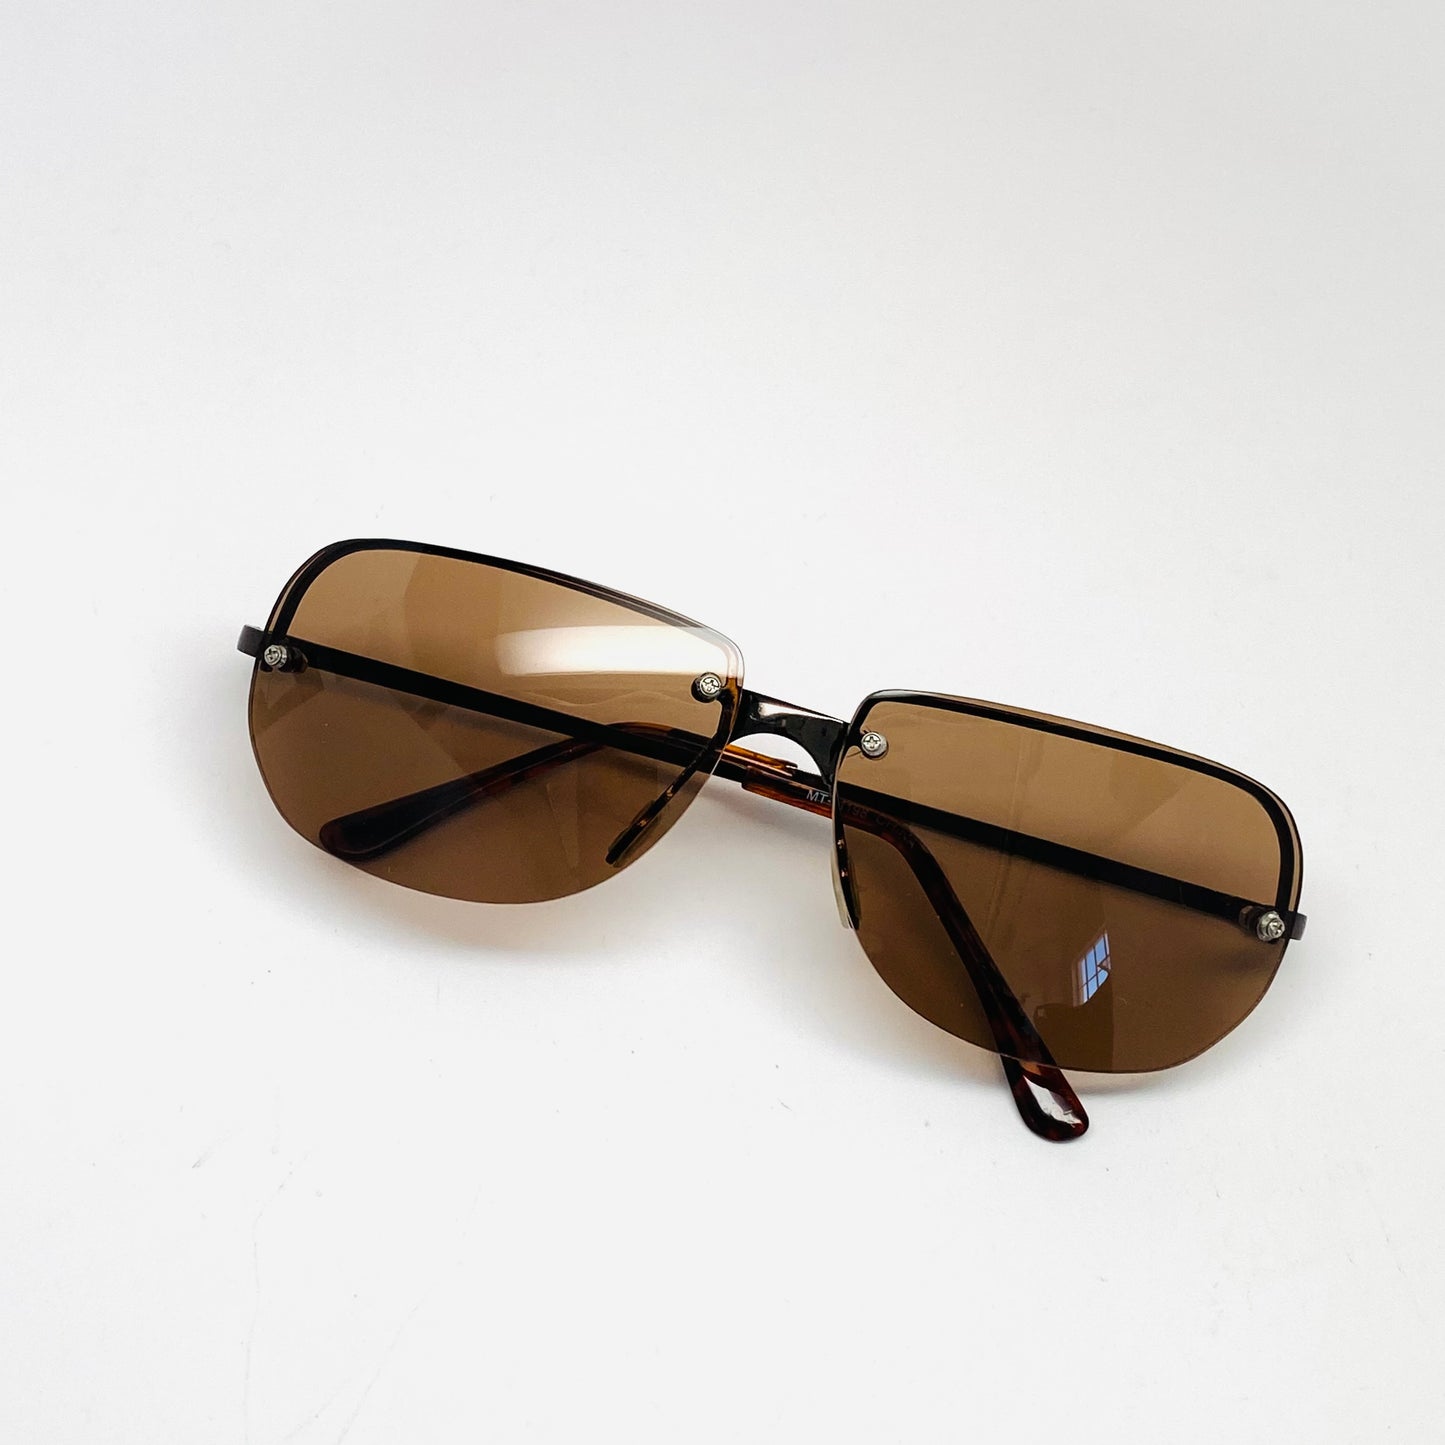 Vintage Standard Sized Frameless Moon Shape Sunglasses - Brown